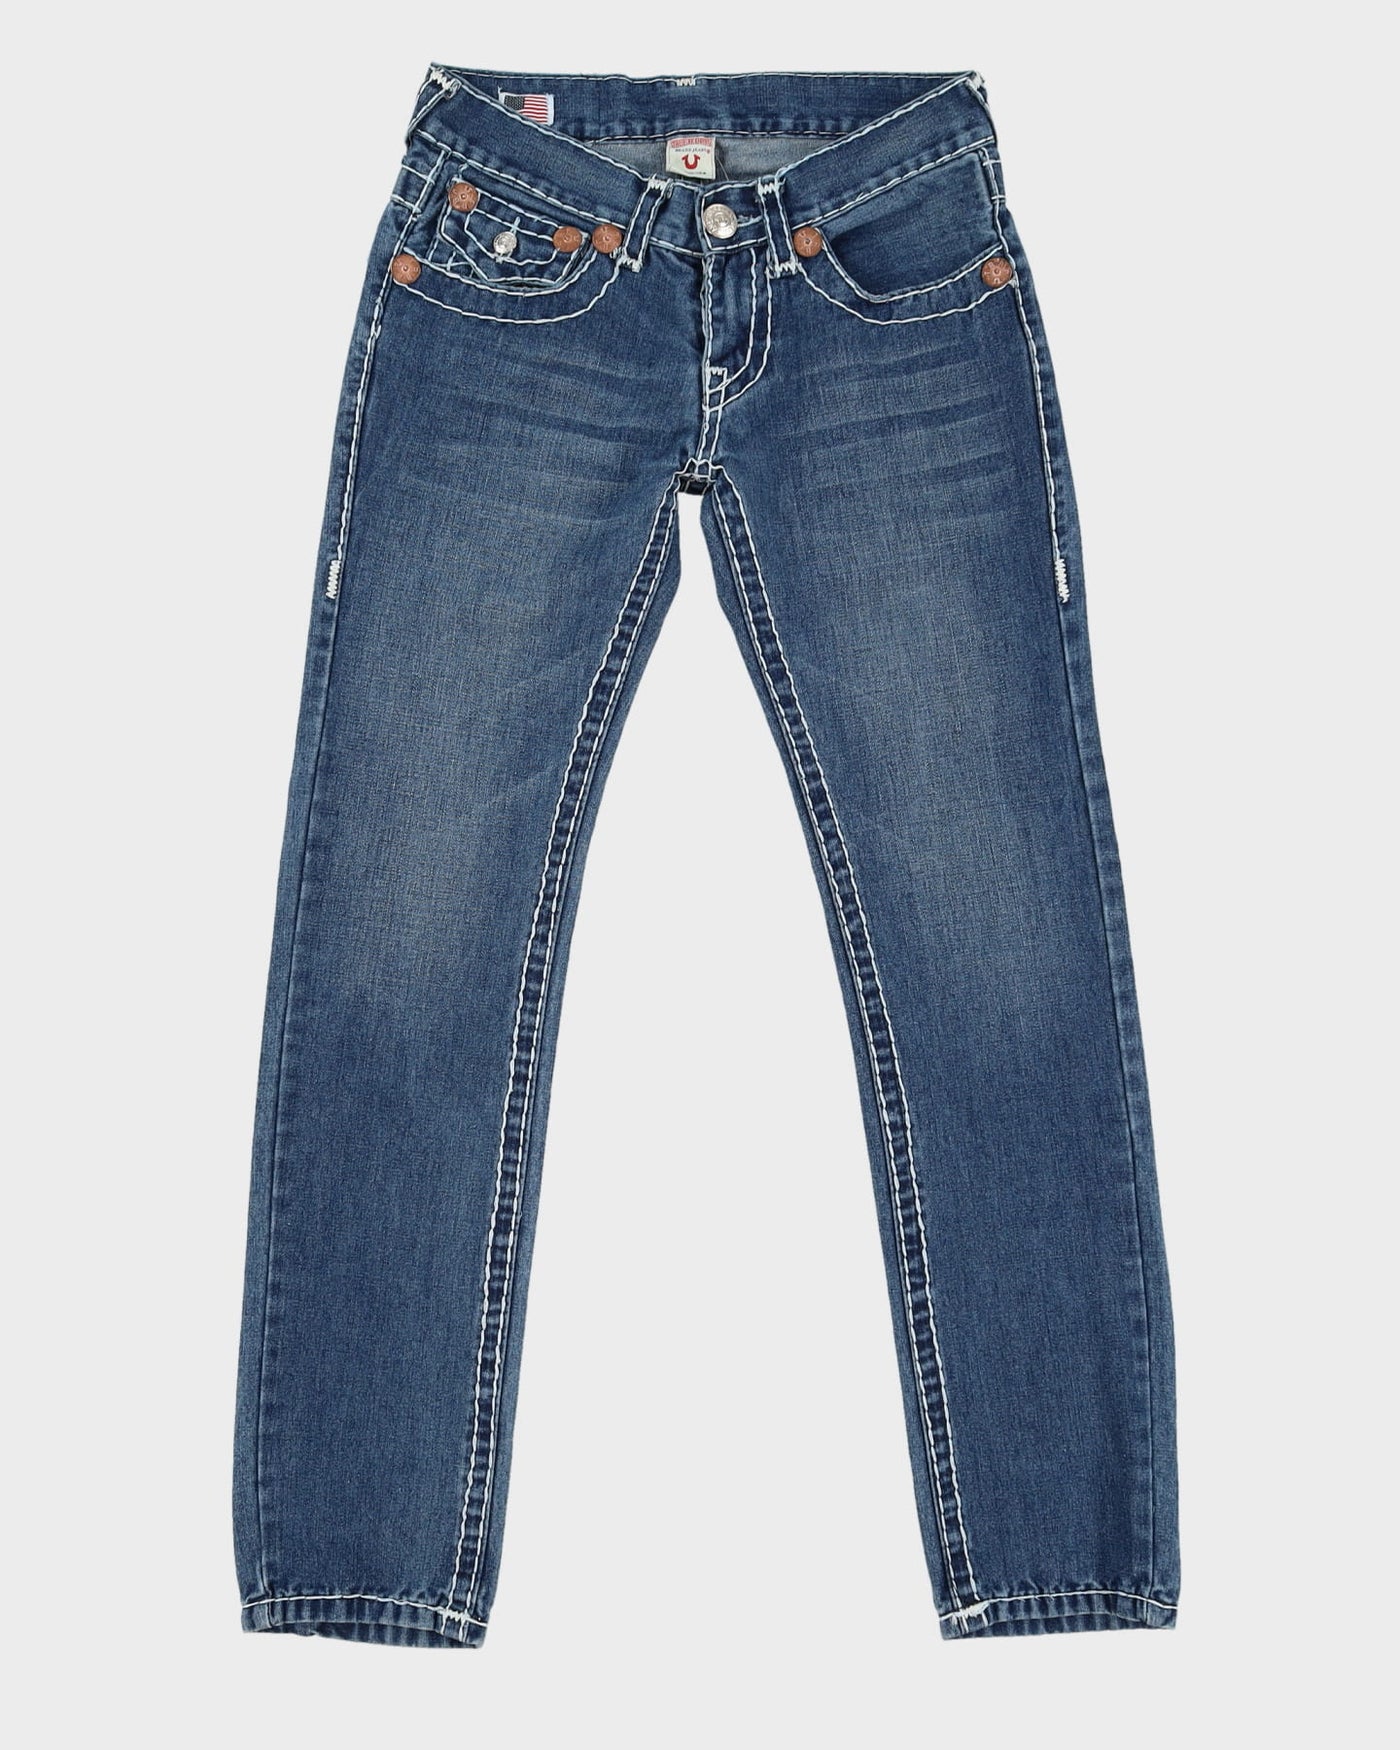 00s True Religion Contrast Stitch Dark Wash Blue Jeans - W30 L32